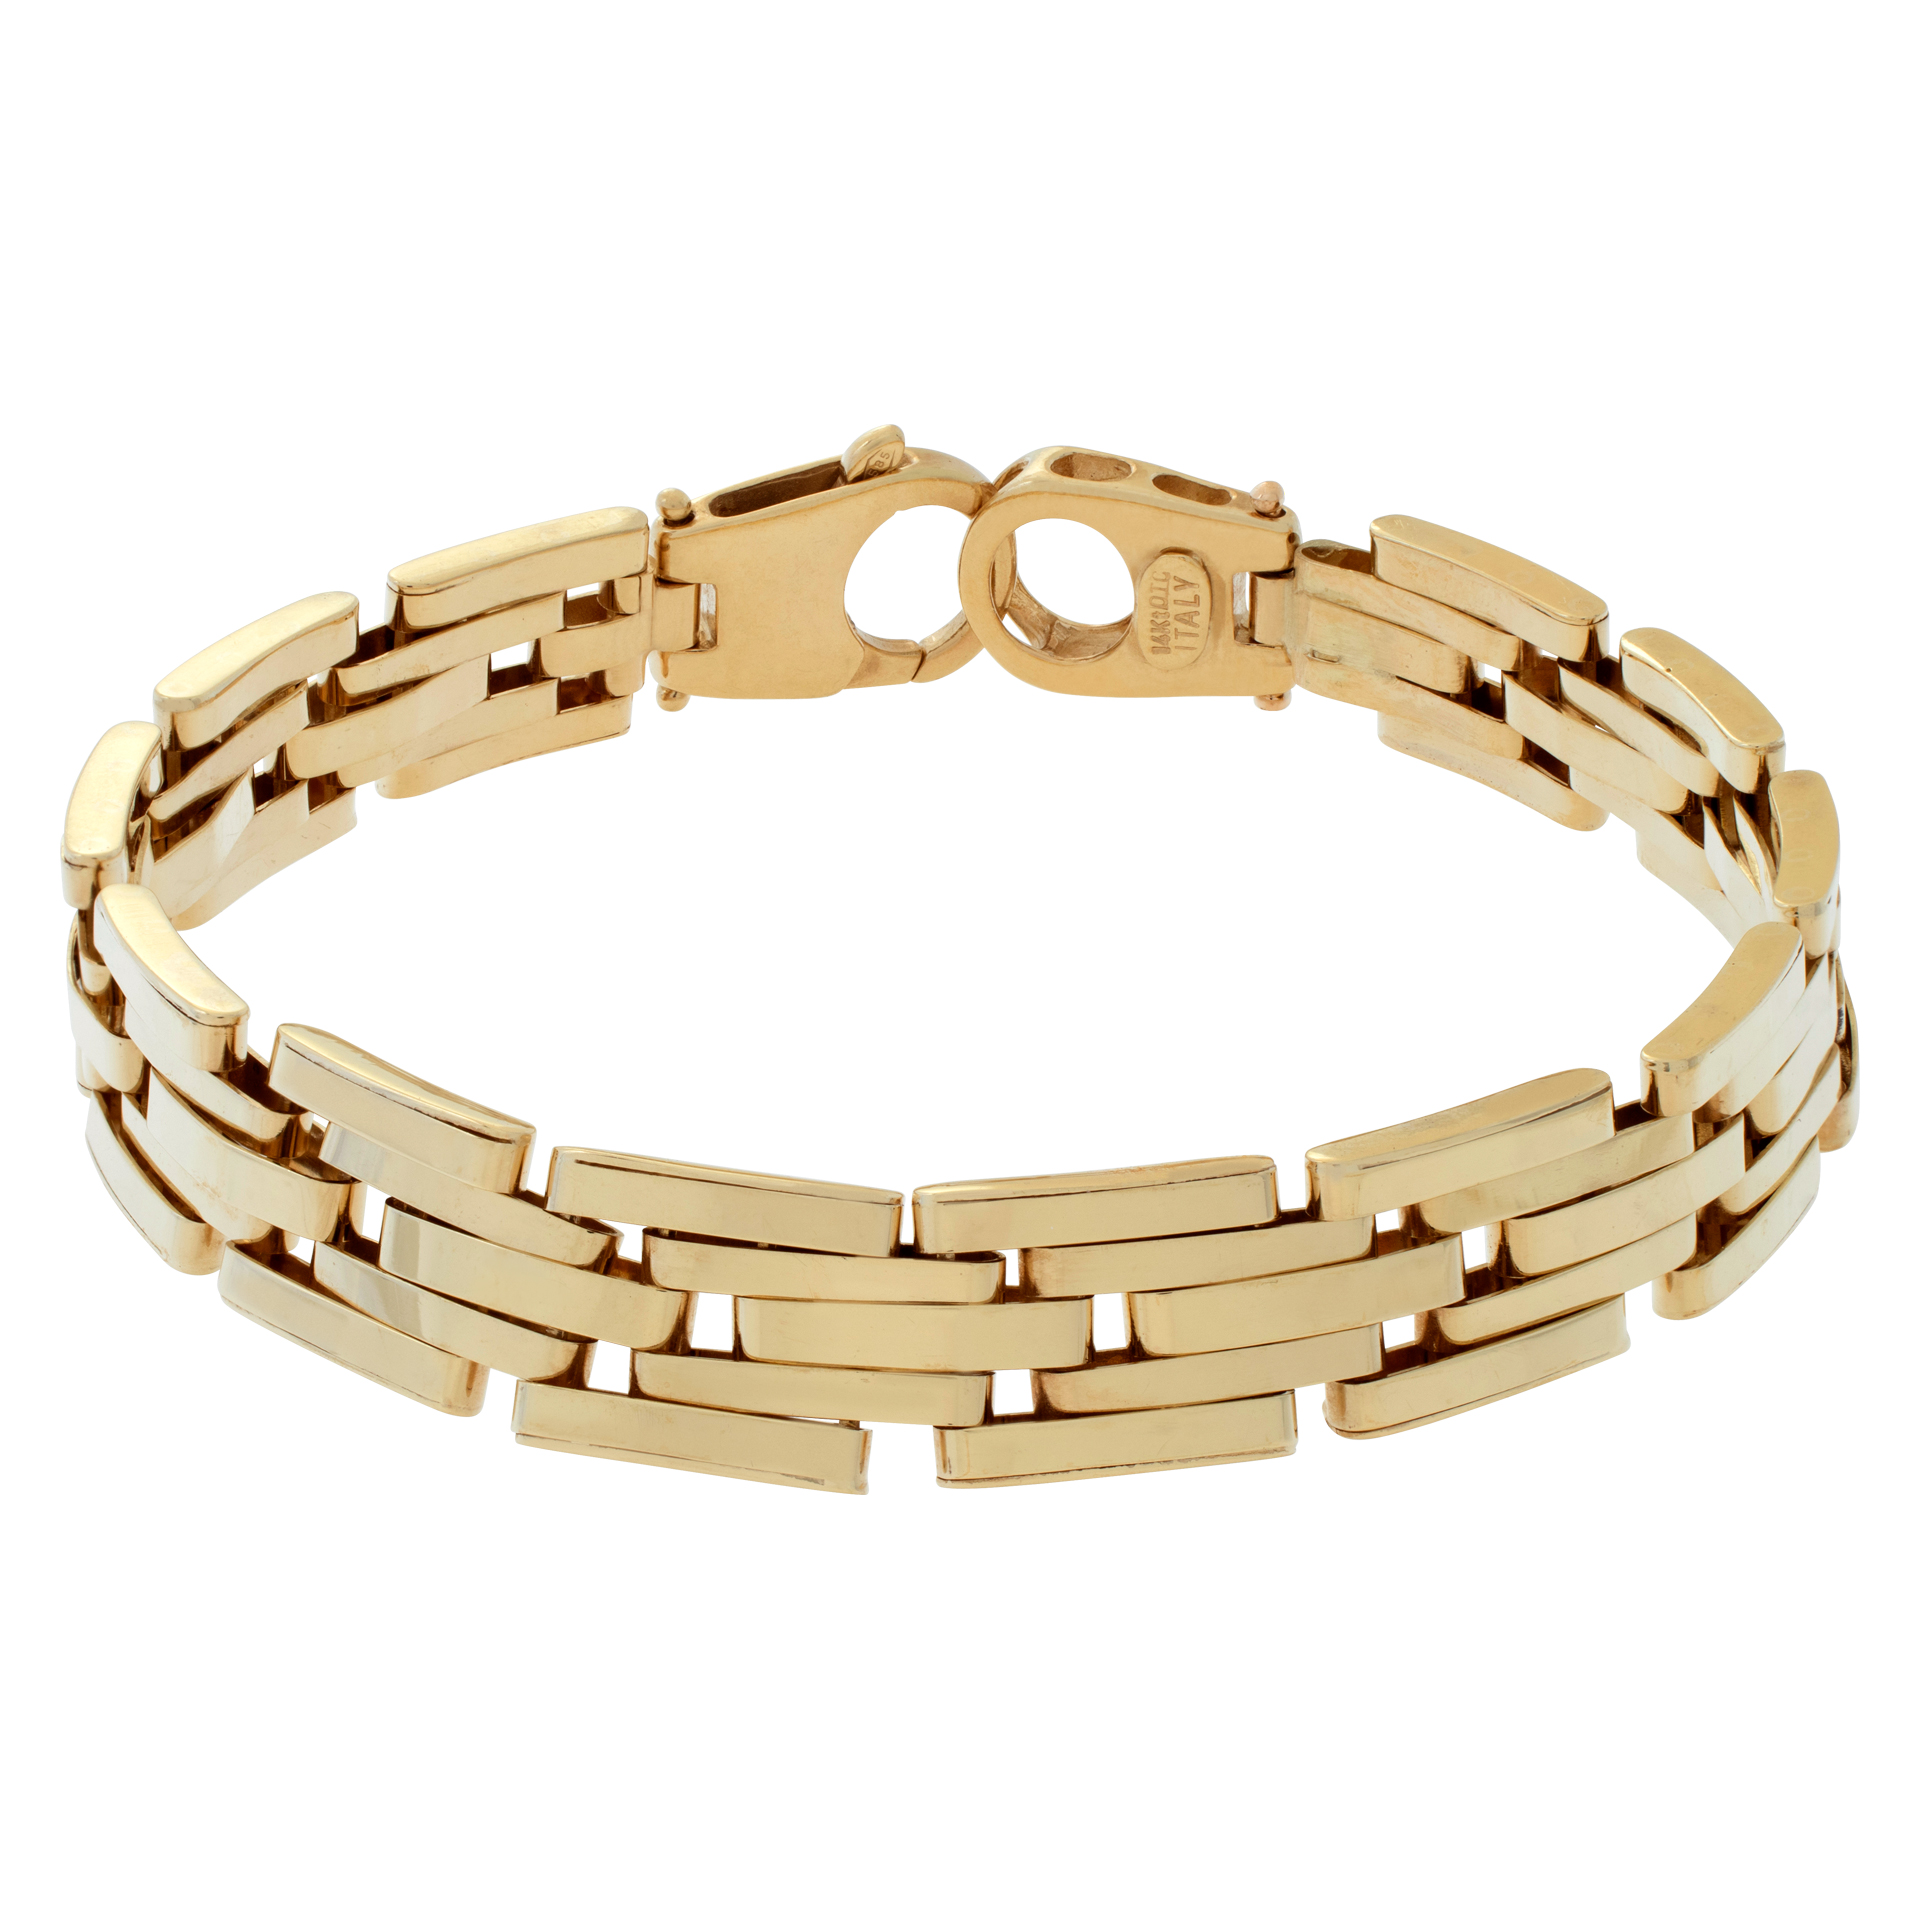 Unisex flat linked bracelet in 14k yellow gold